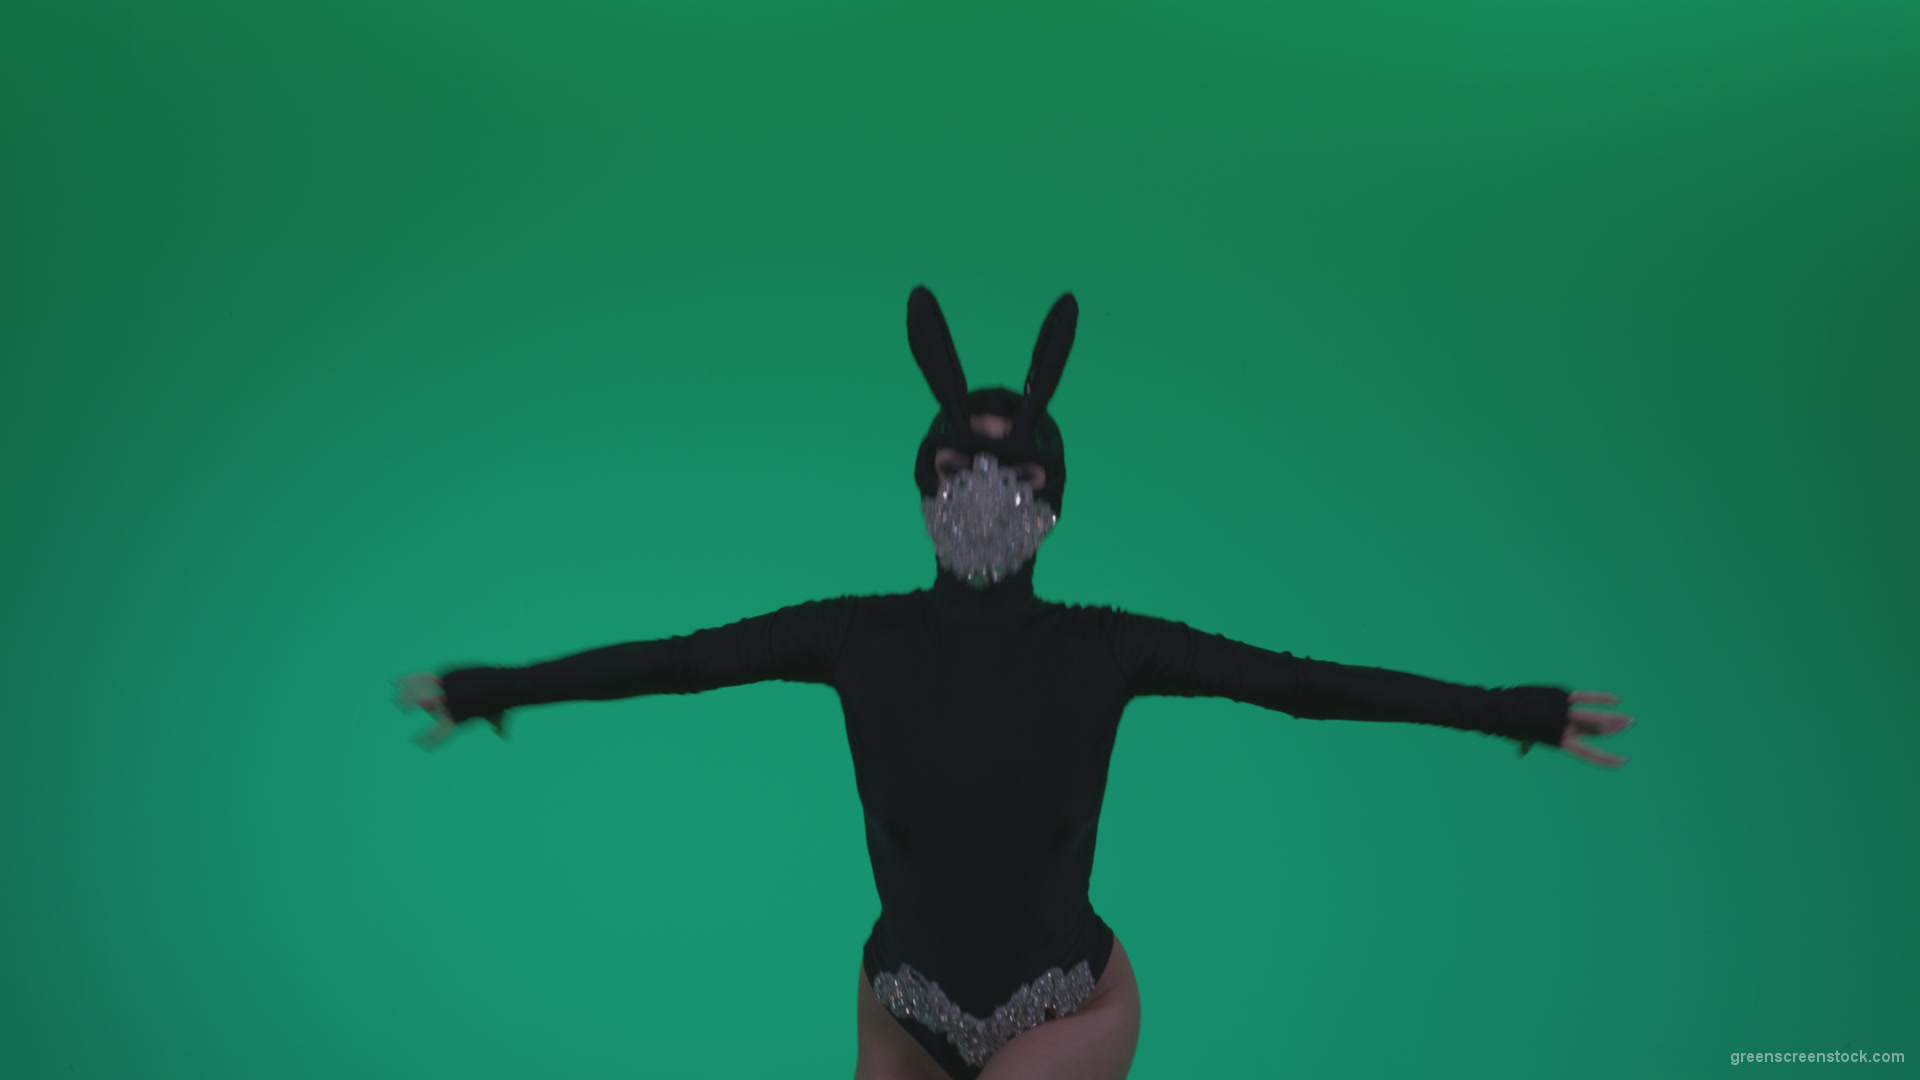 Go-go-Dancer-Black-Rabbit-u12-Green-Screen-Video-Footage_006 Green Screen Stock